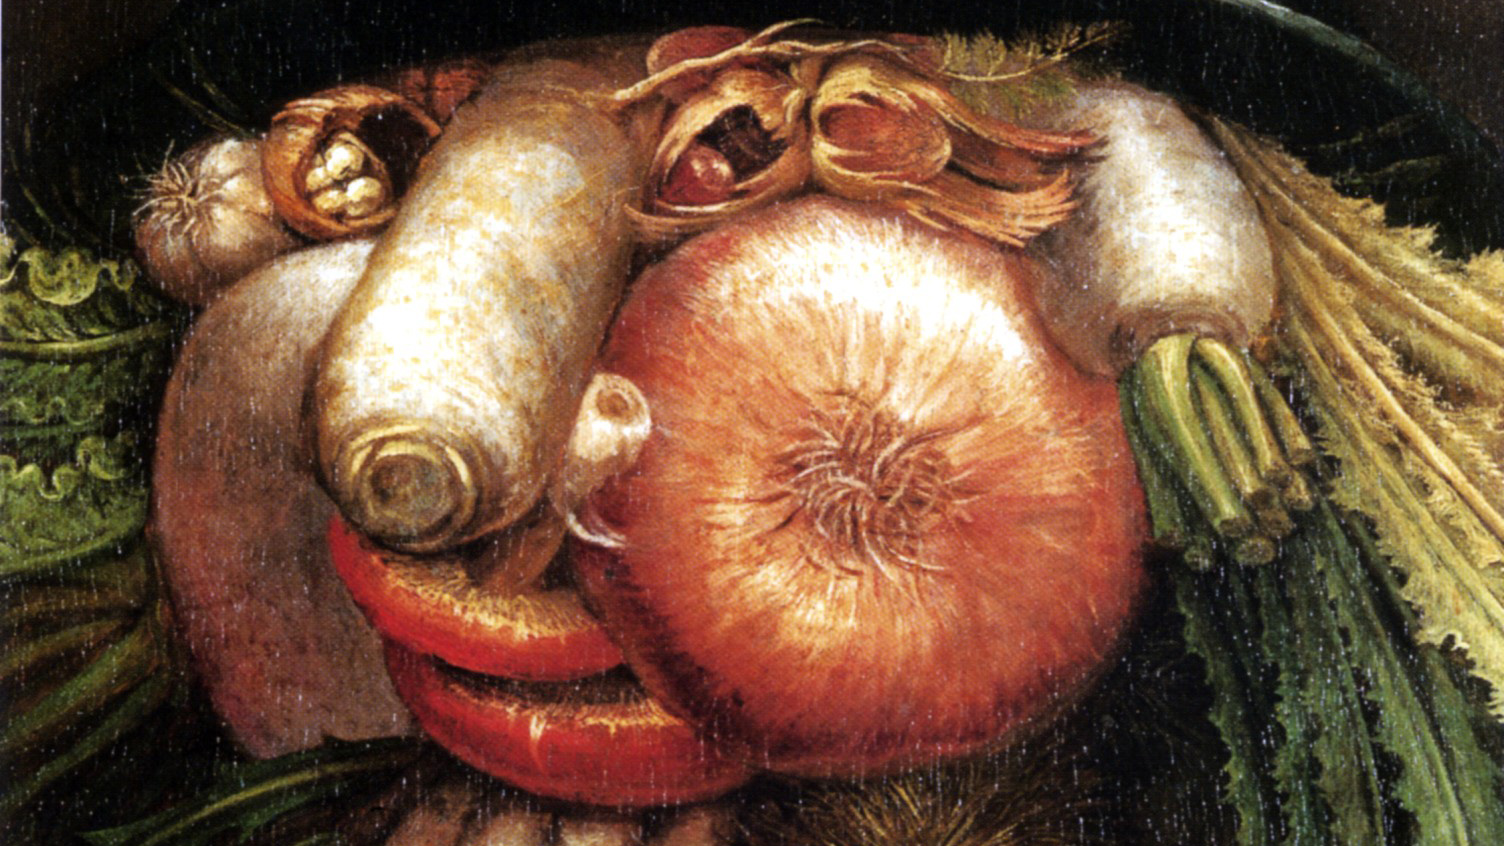 Giuseppe Arcimboldo - Portrait with Vegetables (The Green Grocer)